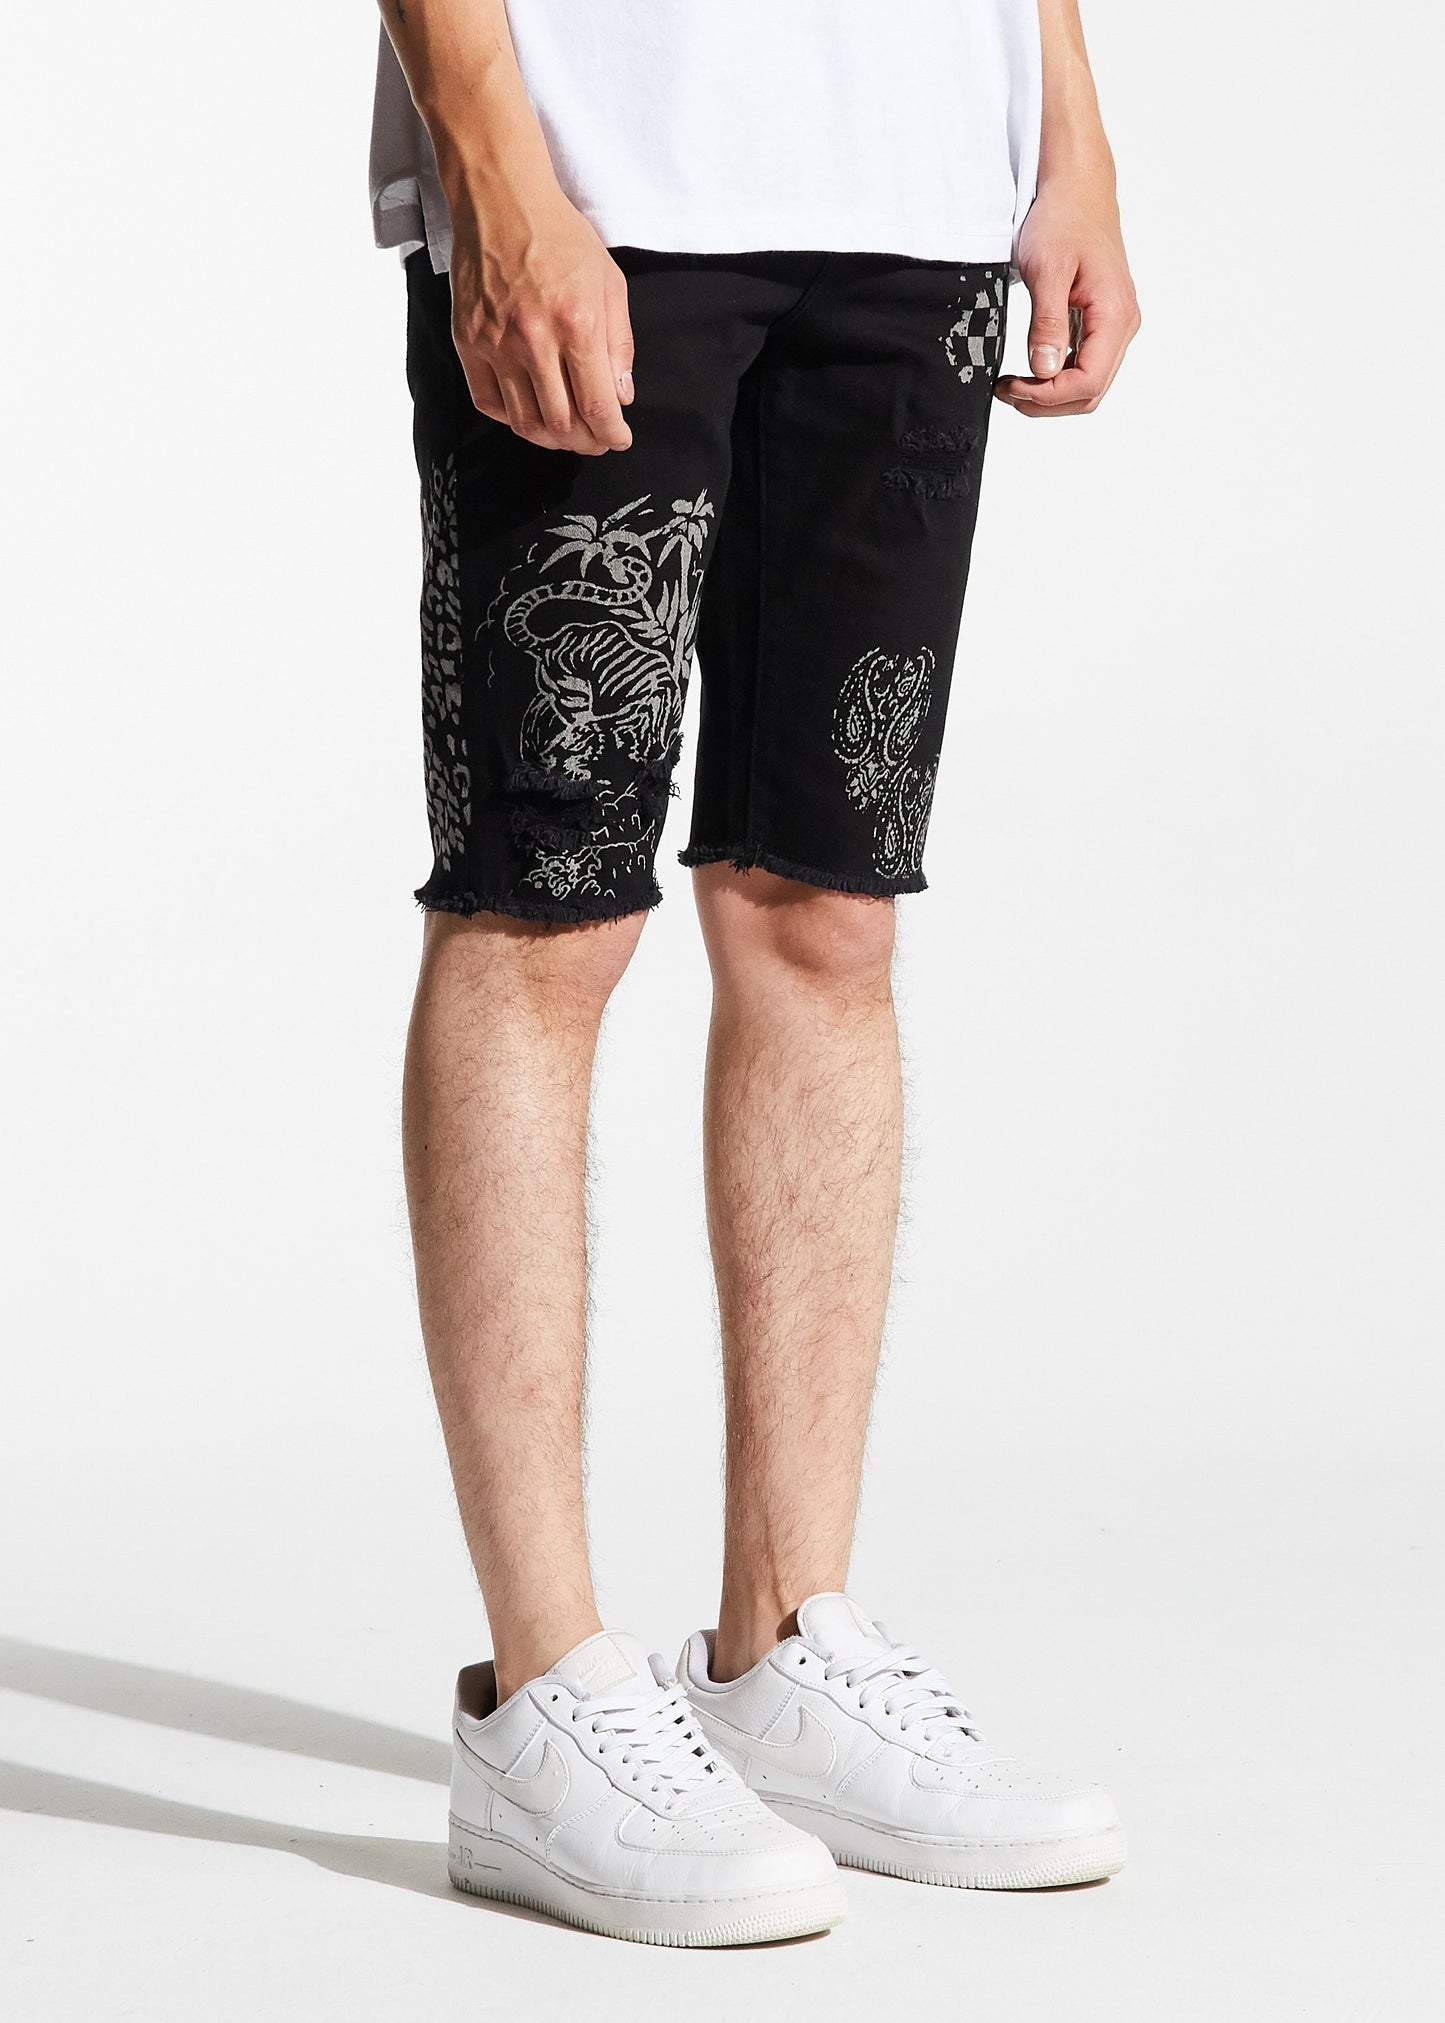 Pacific Shorts (Black/Checker)